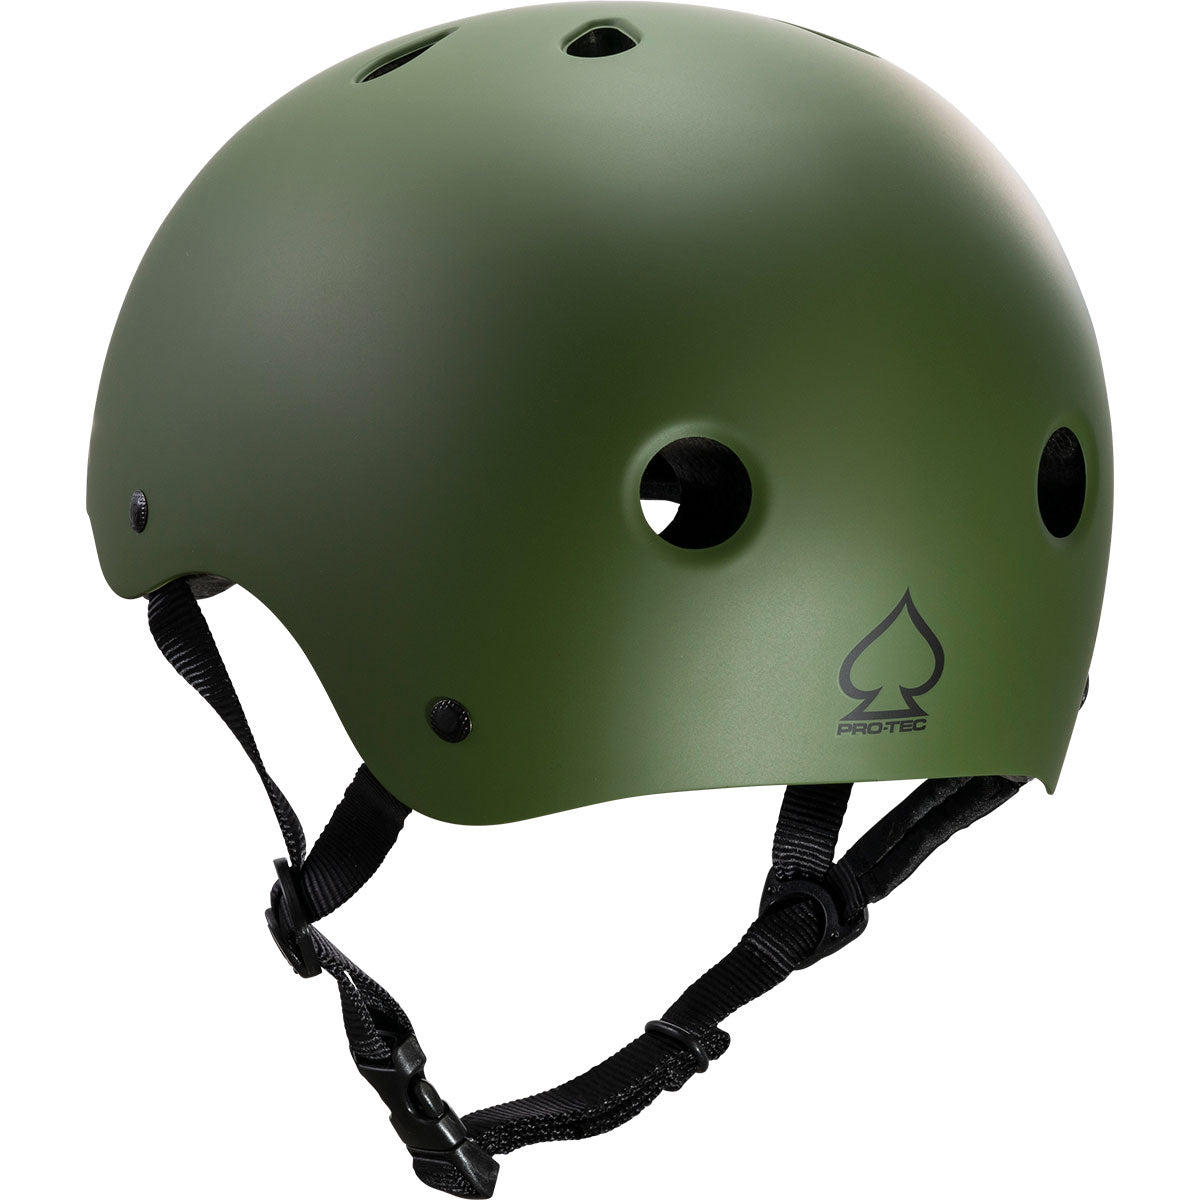 Pro-Tec Classic Certified Helmet - Matte Olive image 2